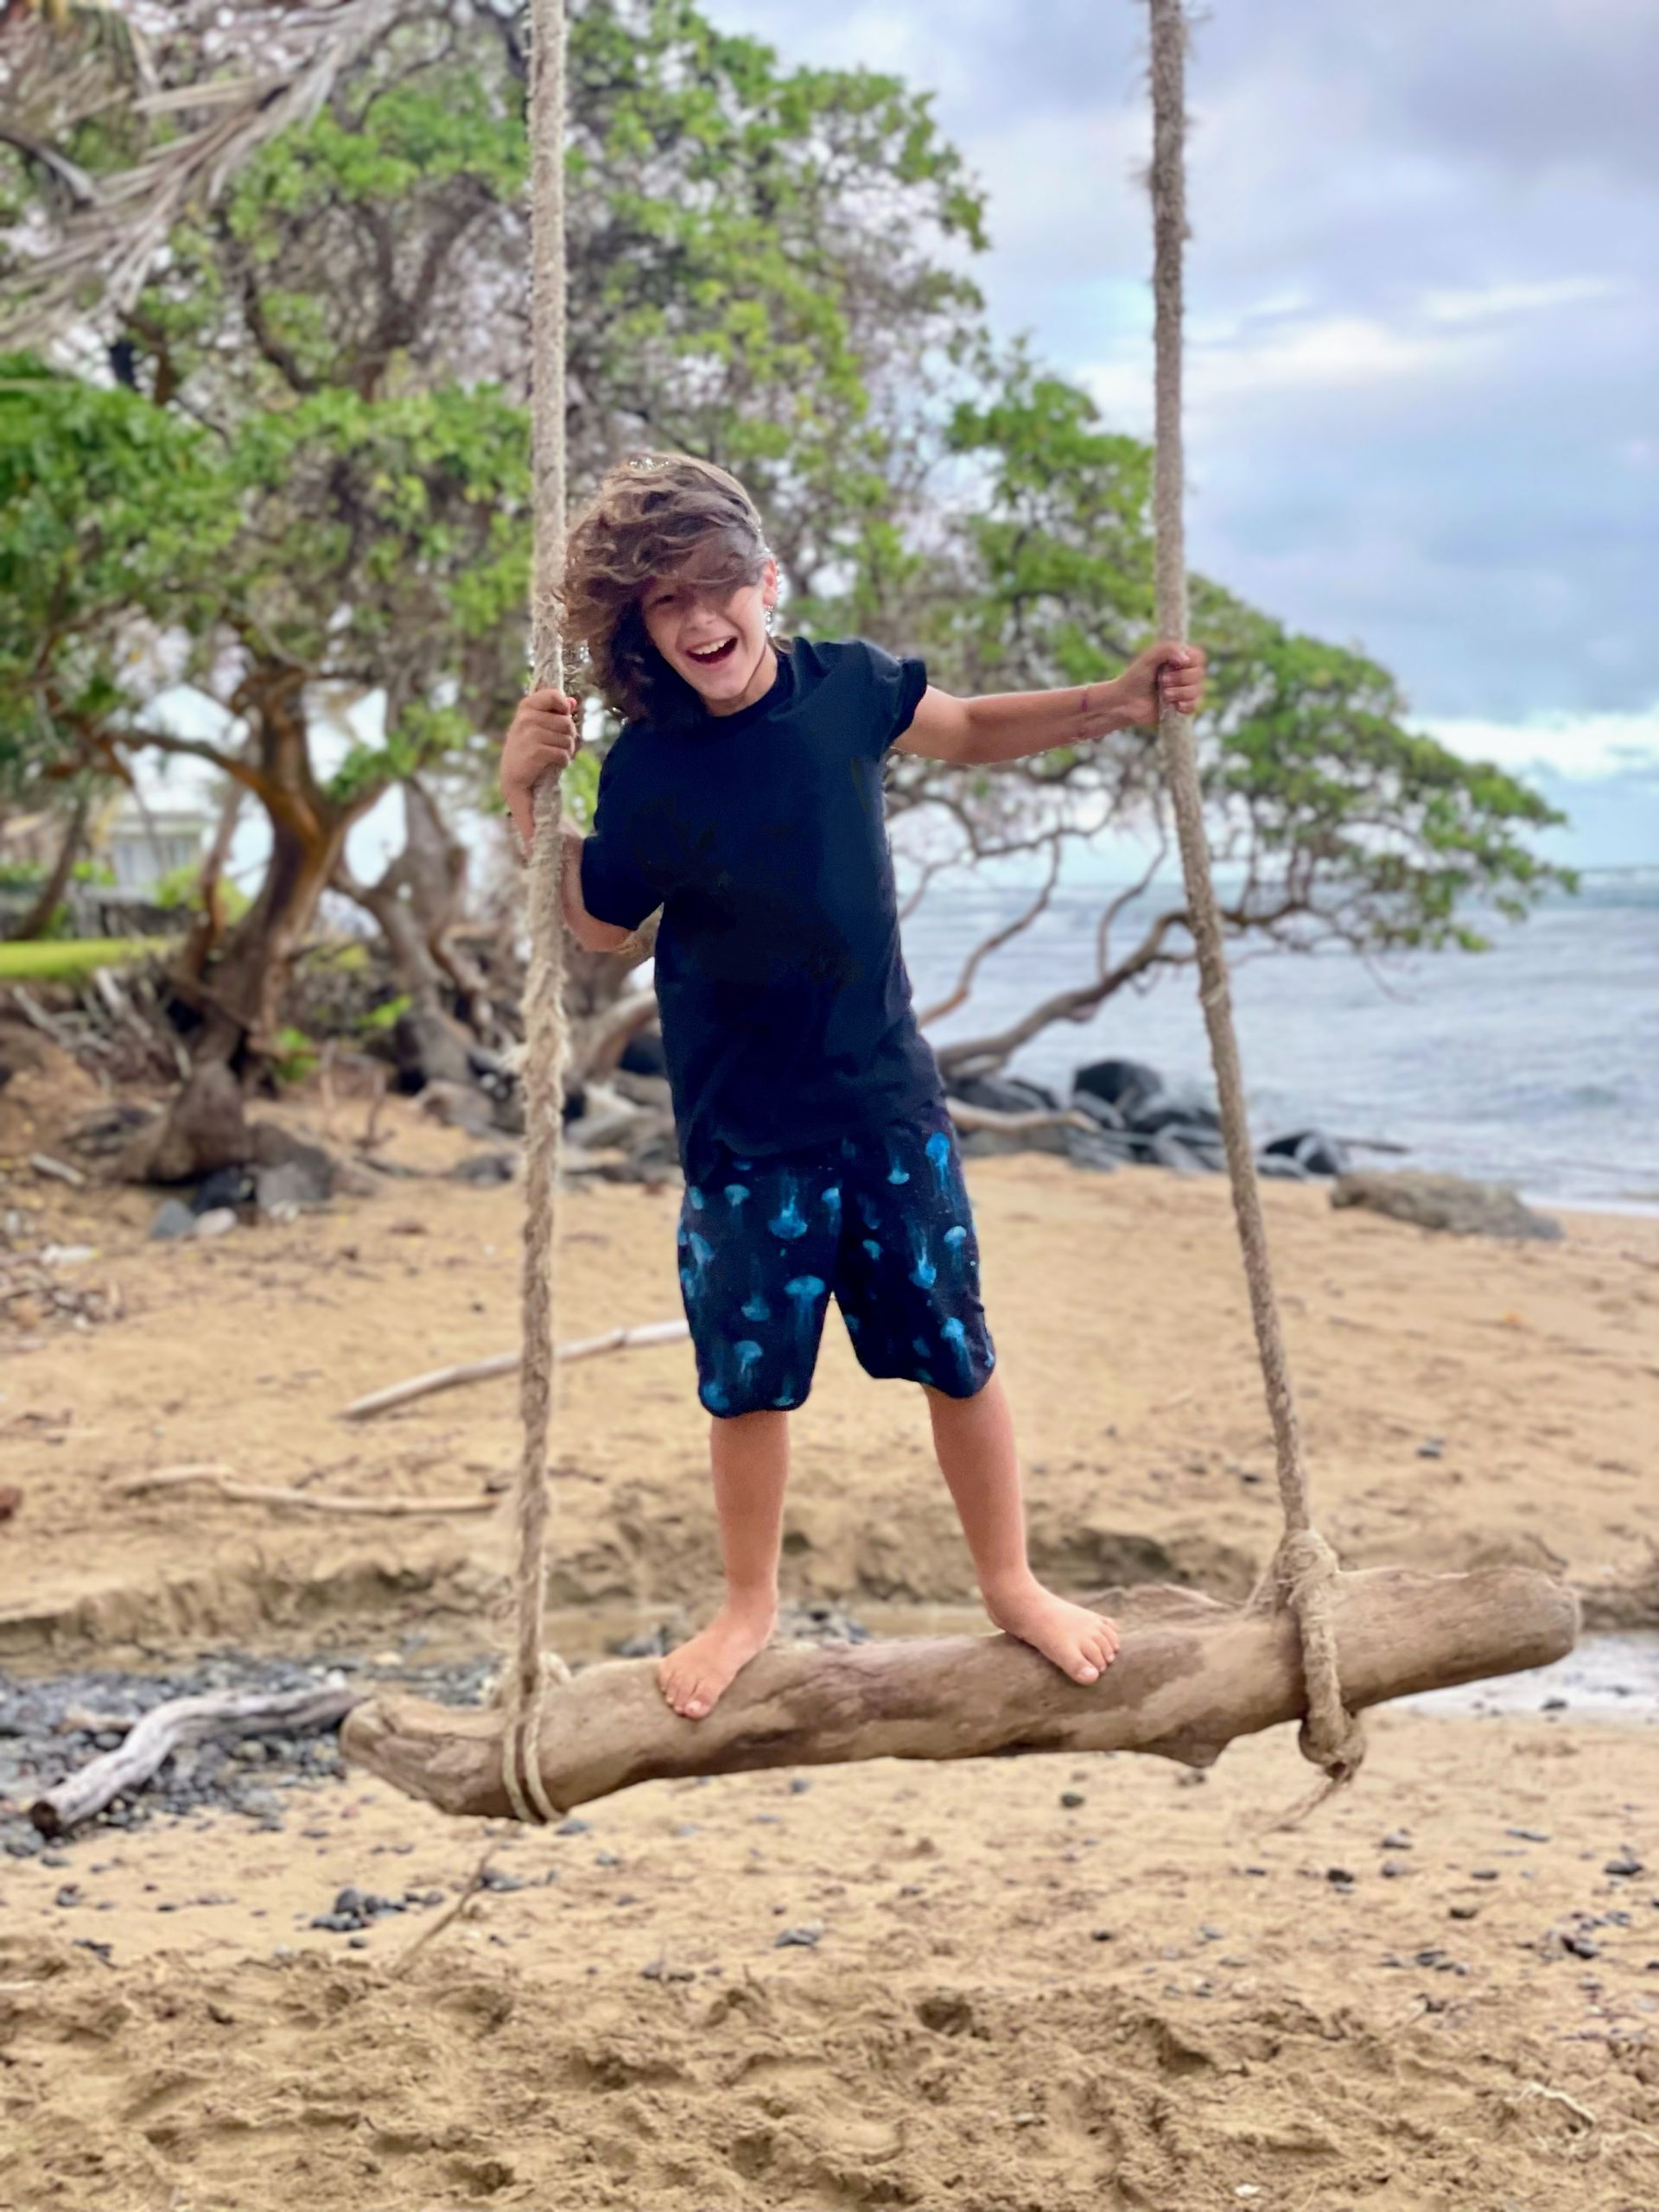 Cute boy swinging on a rope swing on the beach in Hawaii